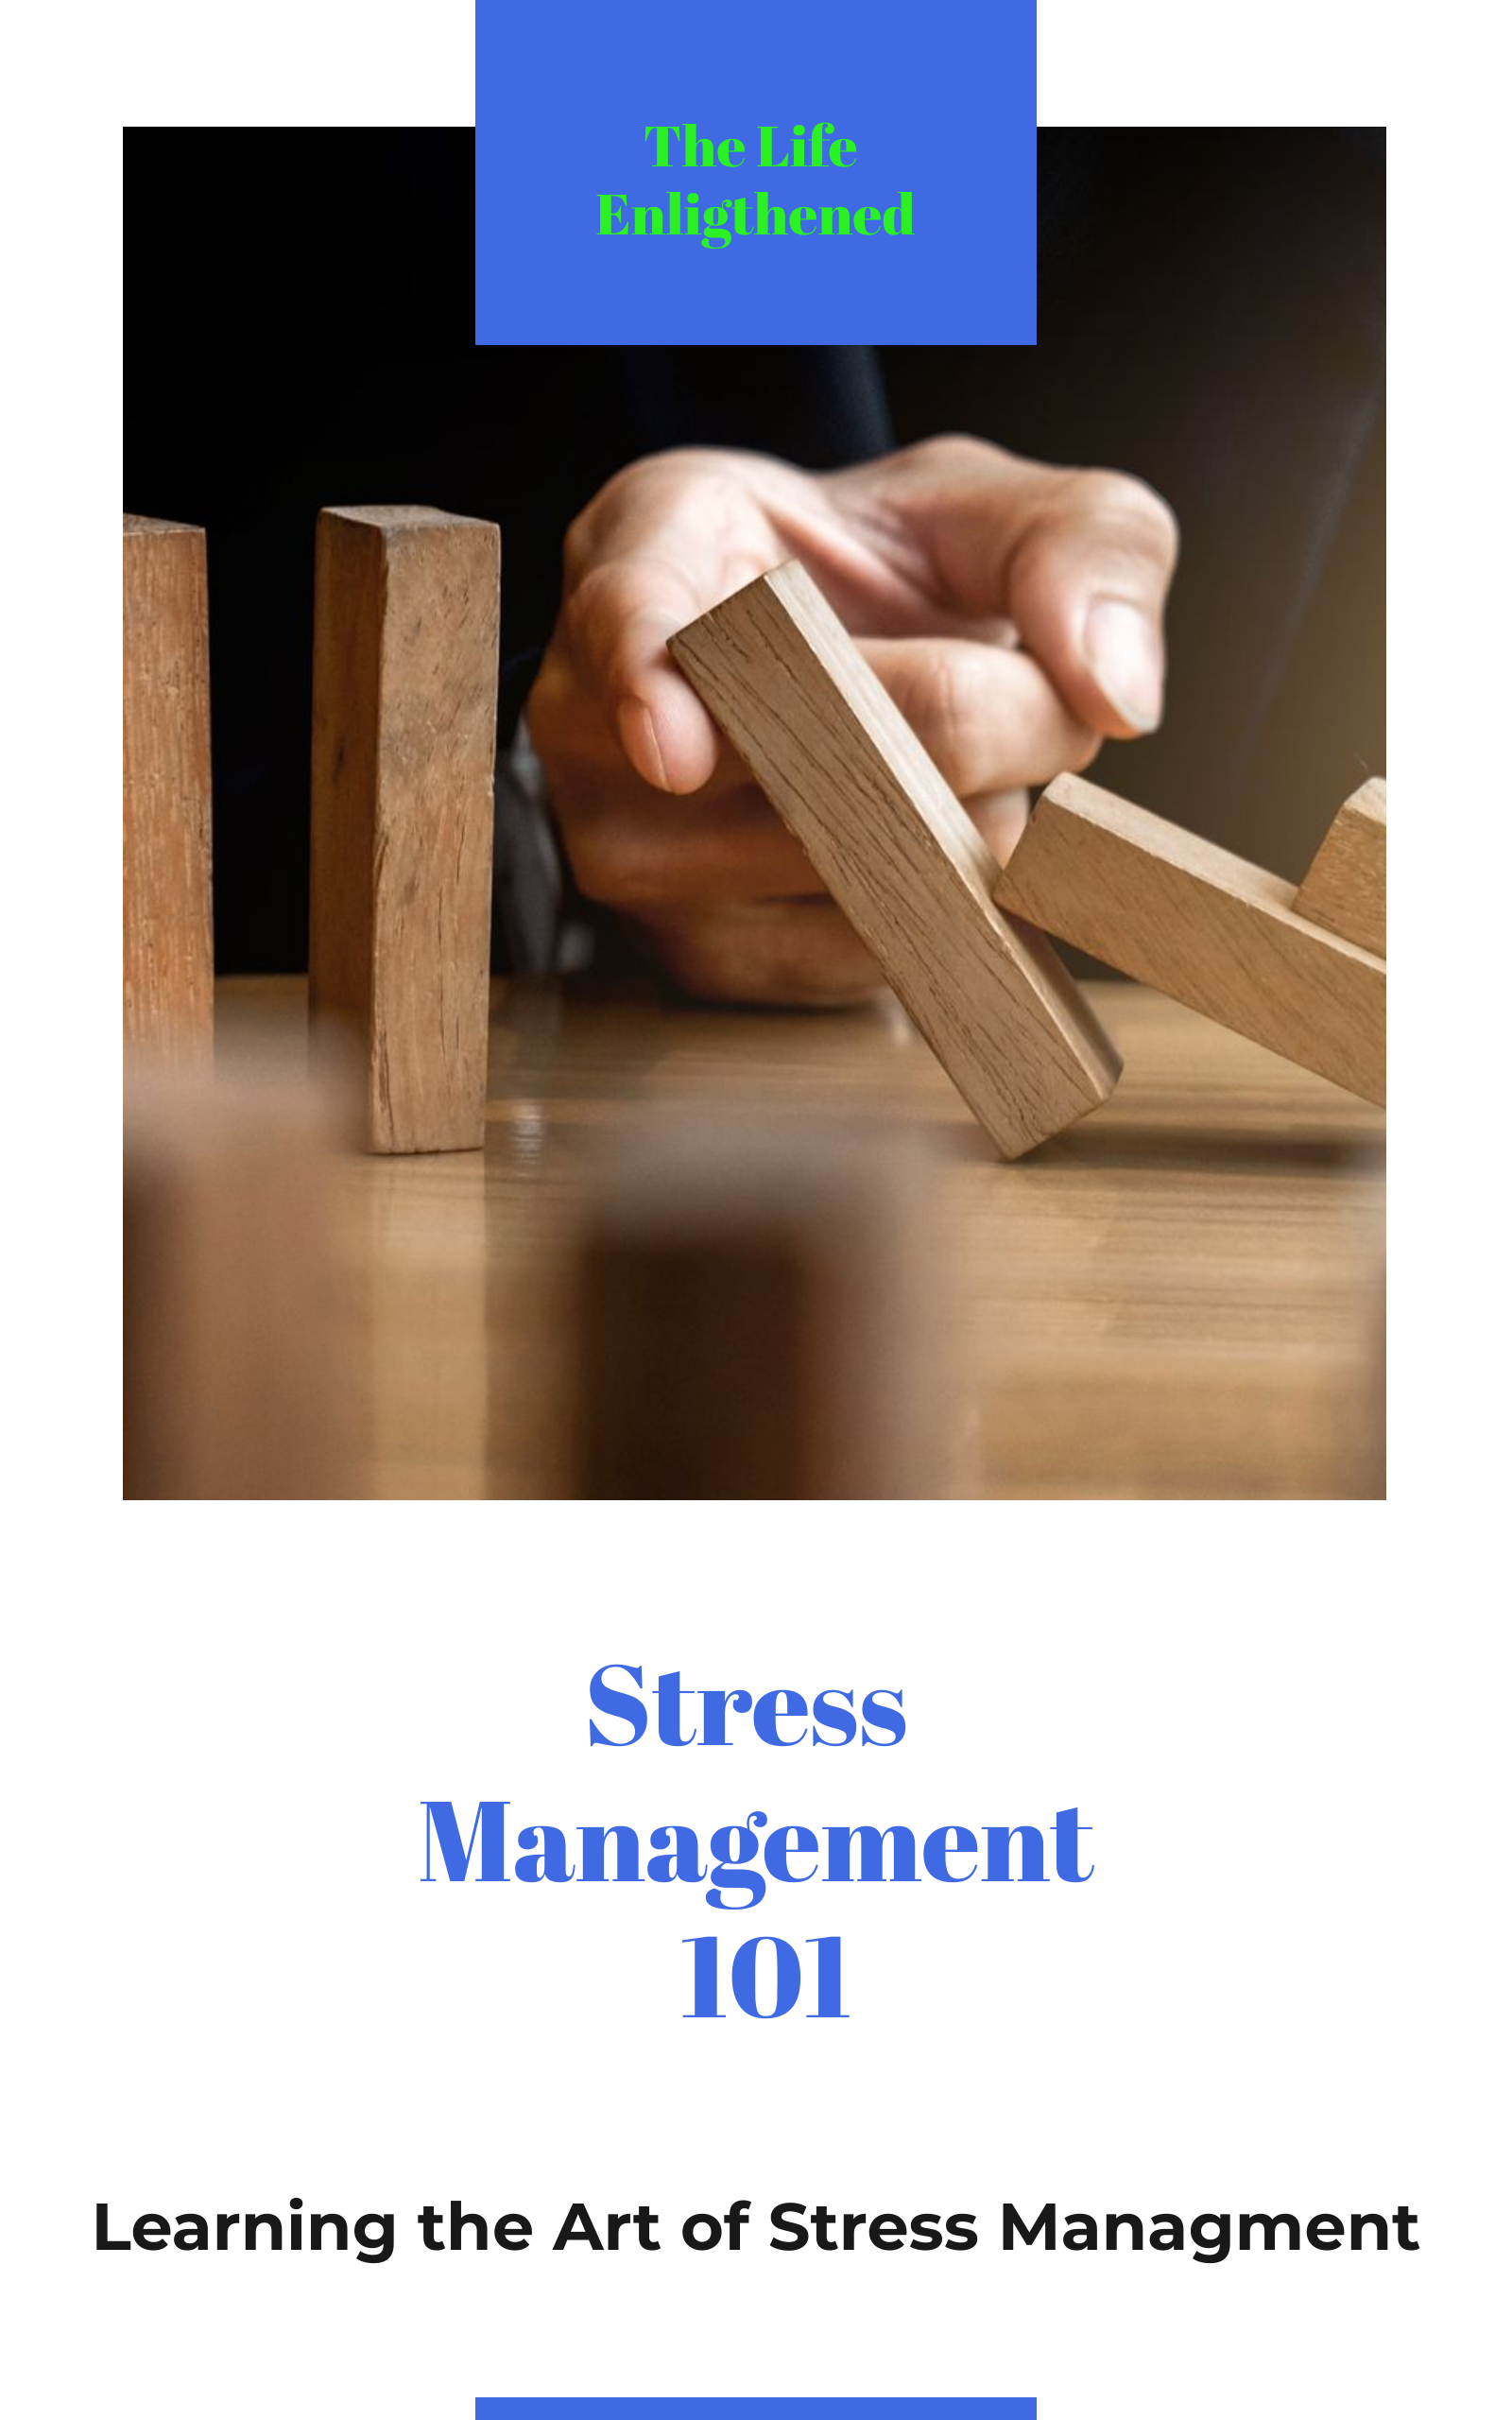 methods for managing stress